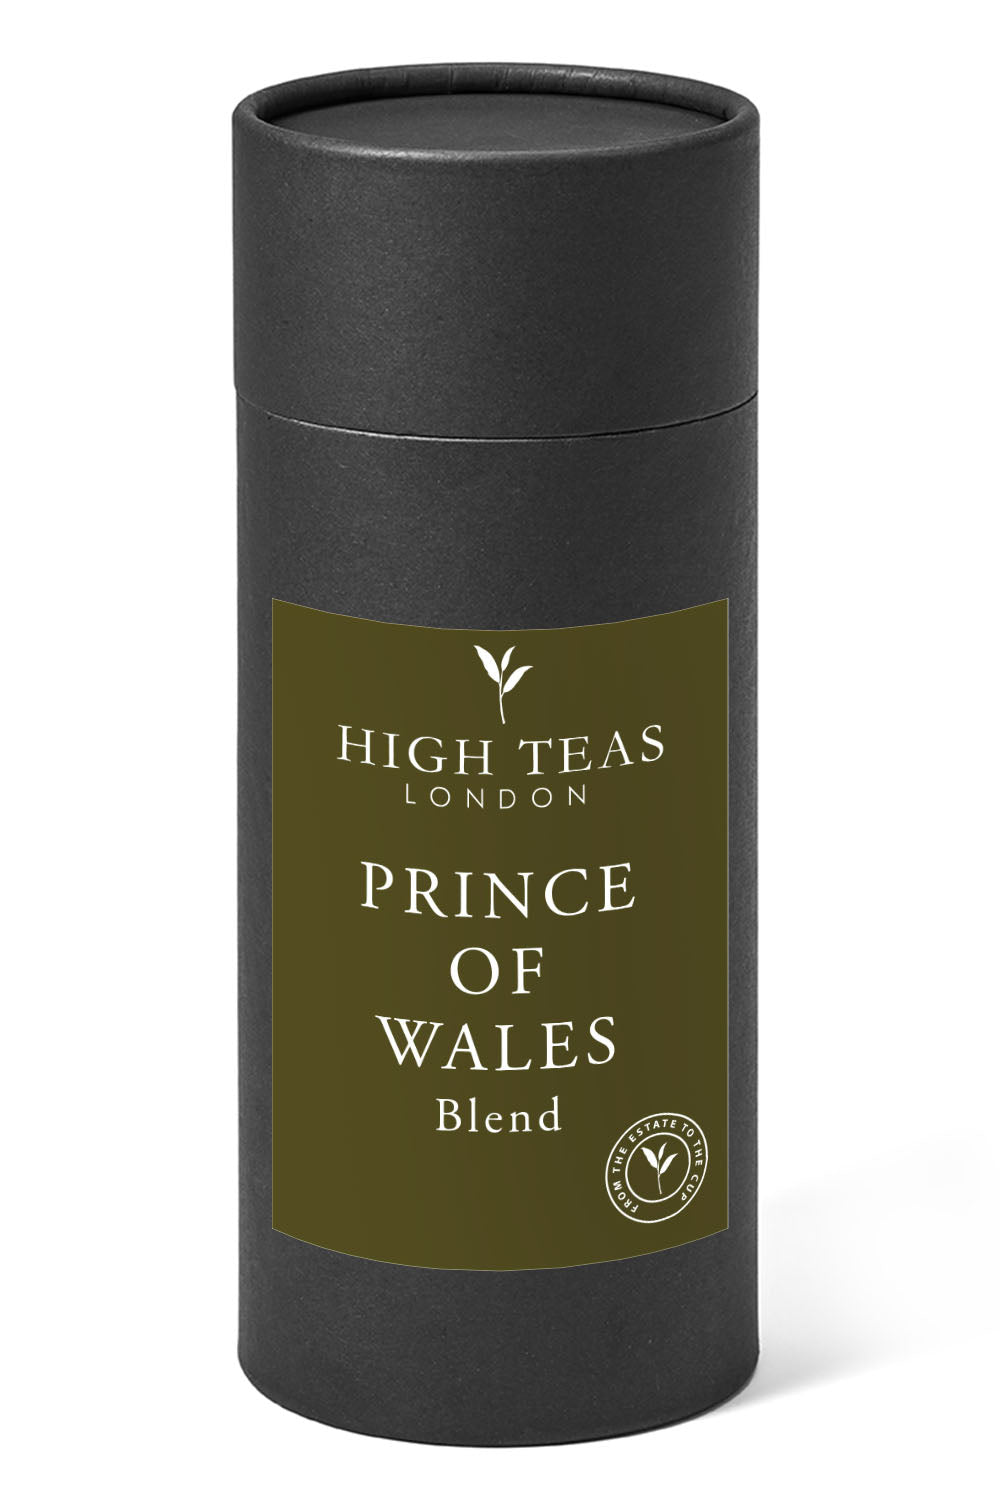 Prince of Wales-150g gift-Loose Leaf Tea-High Teas